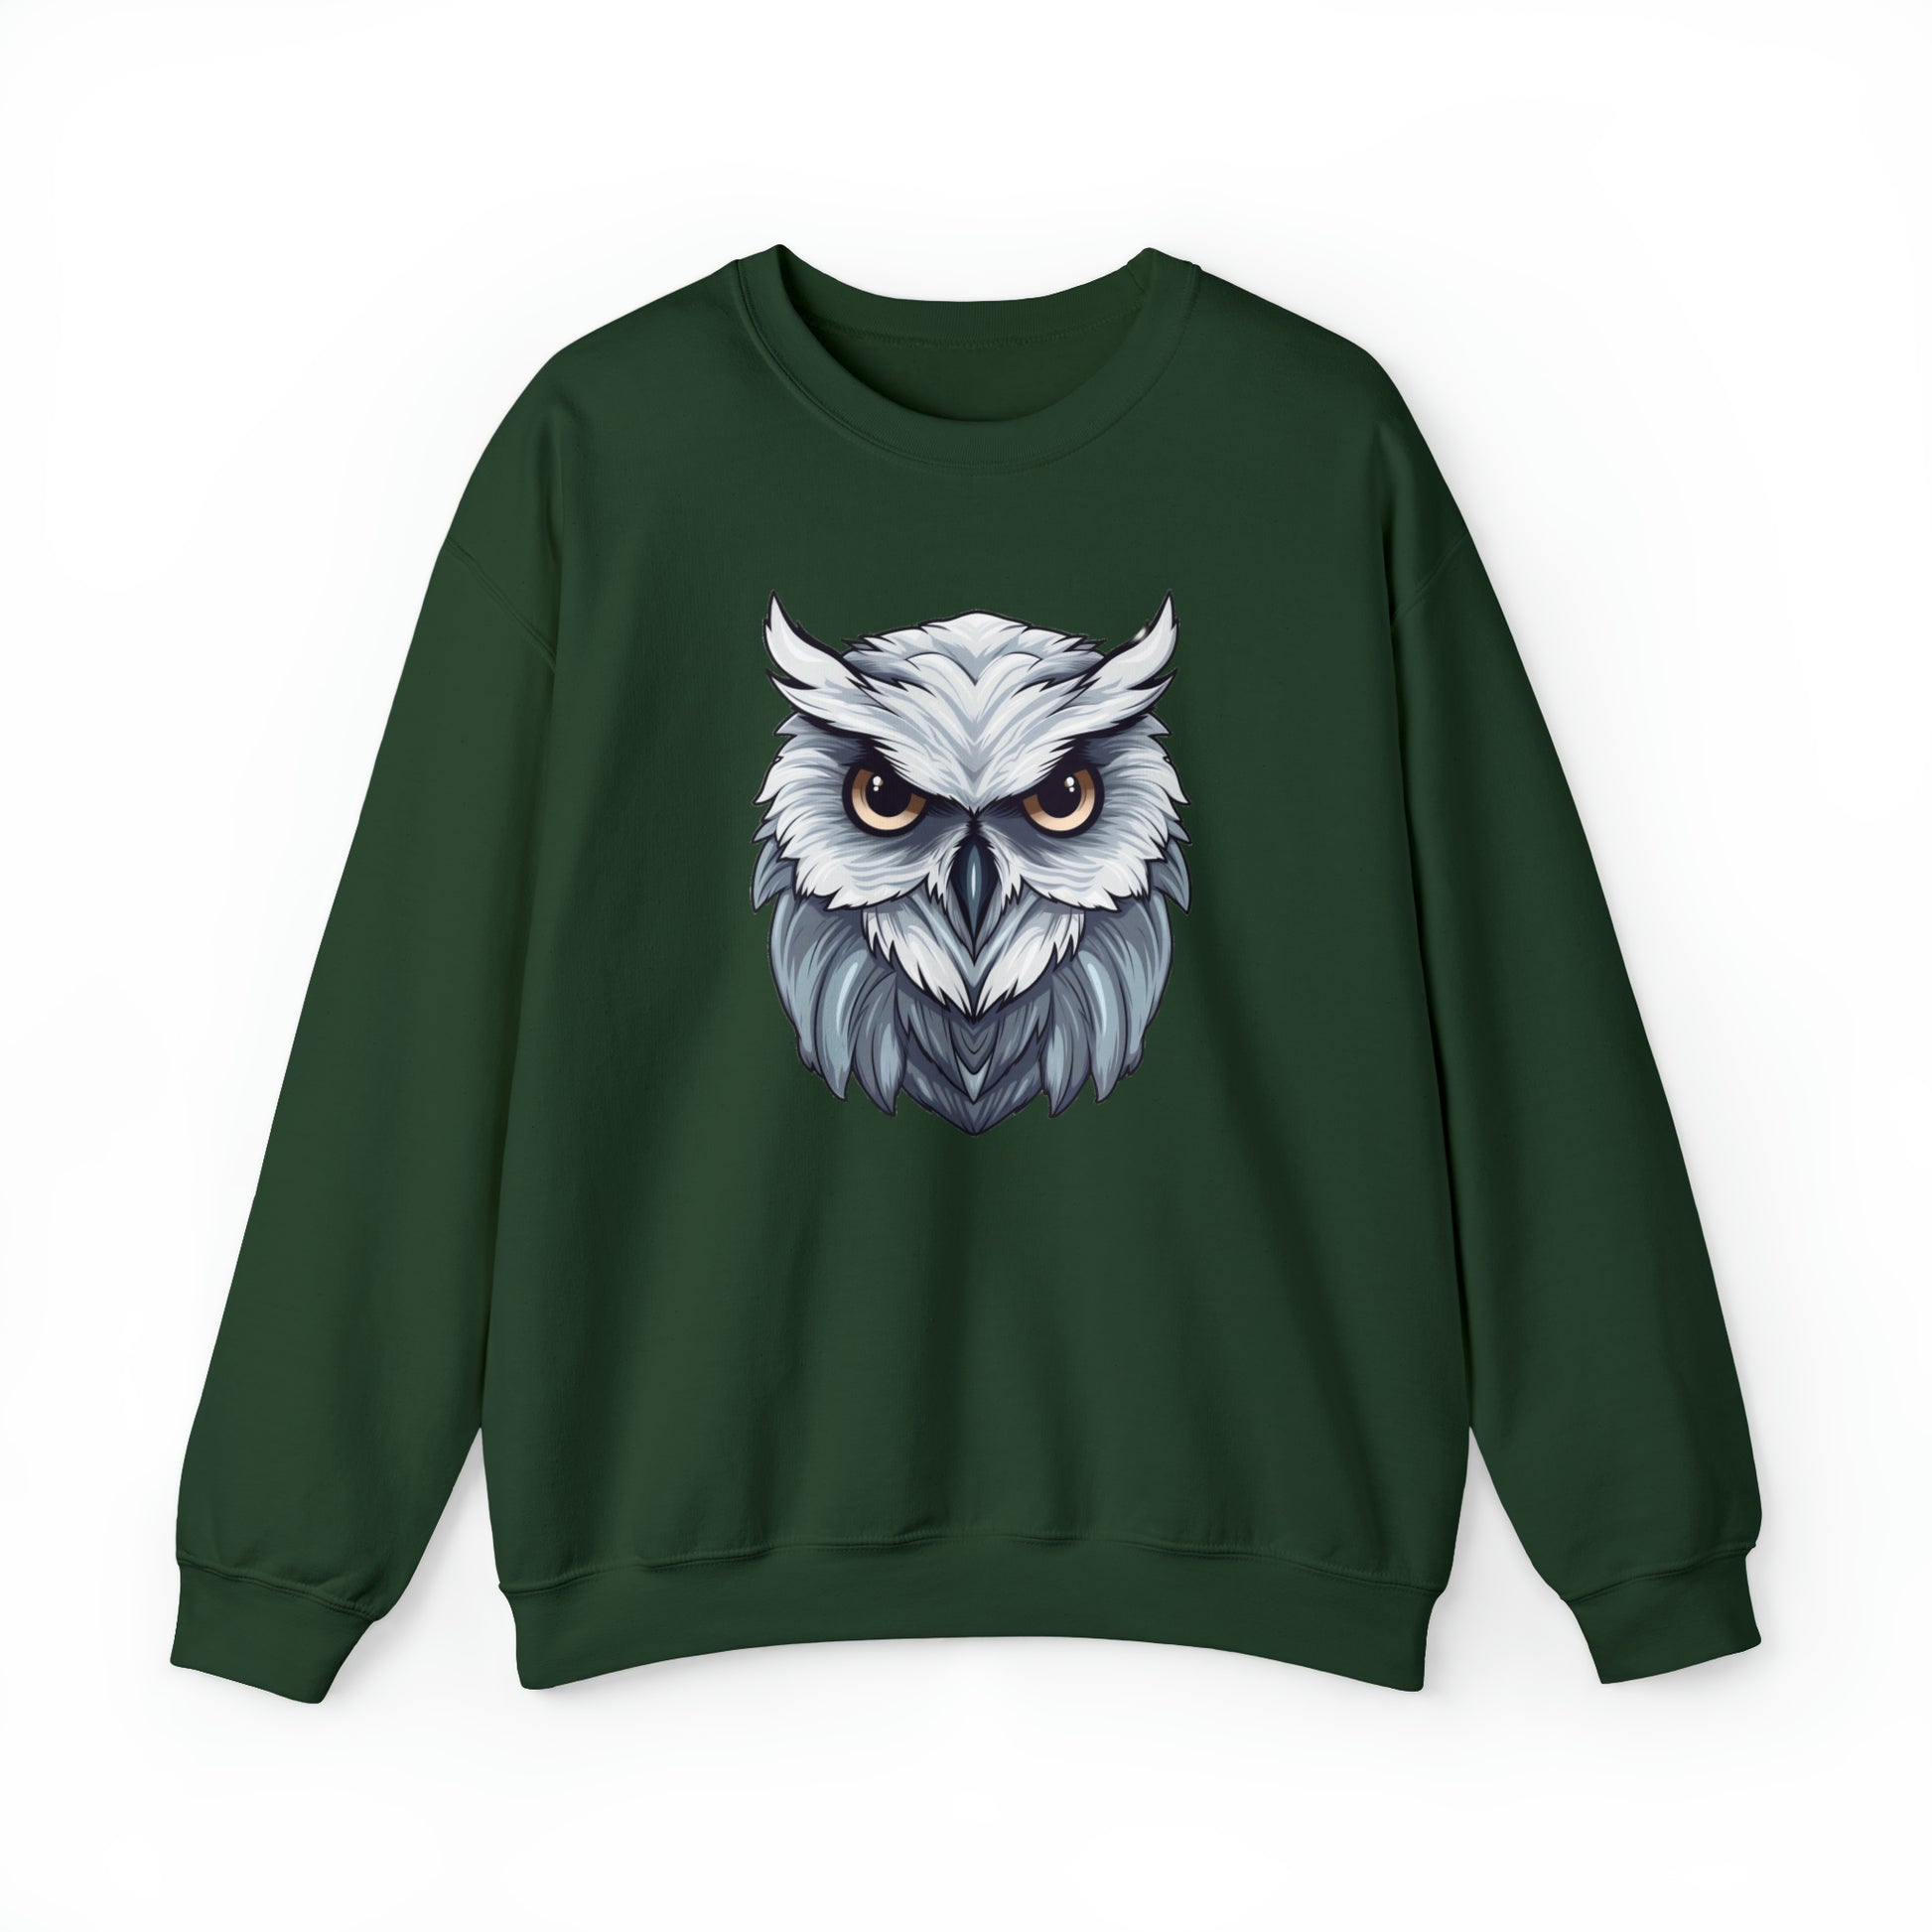 White Owl Sweatshirt, Animal Bird Graphic Crewneck Fleece Cotton Sweater Jumper Pullover Men Women Adult Aesthetic Designer Top Starcove Fashion